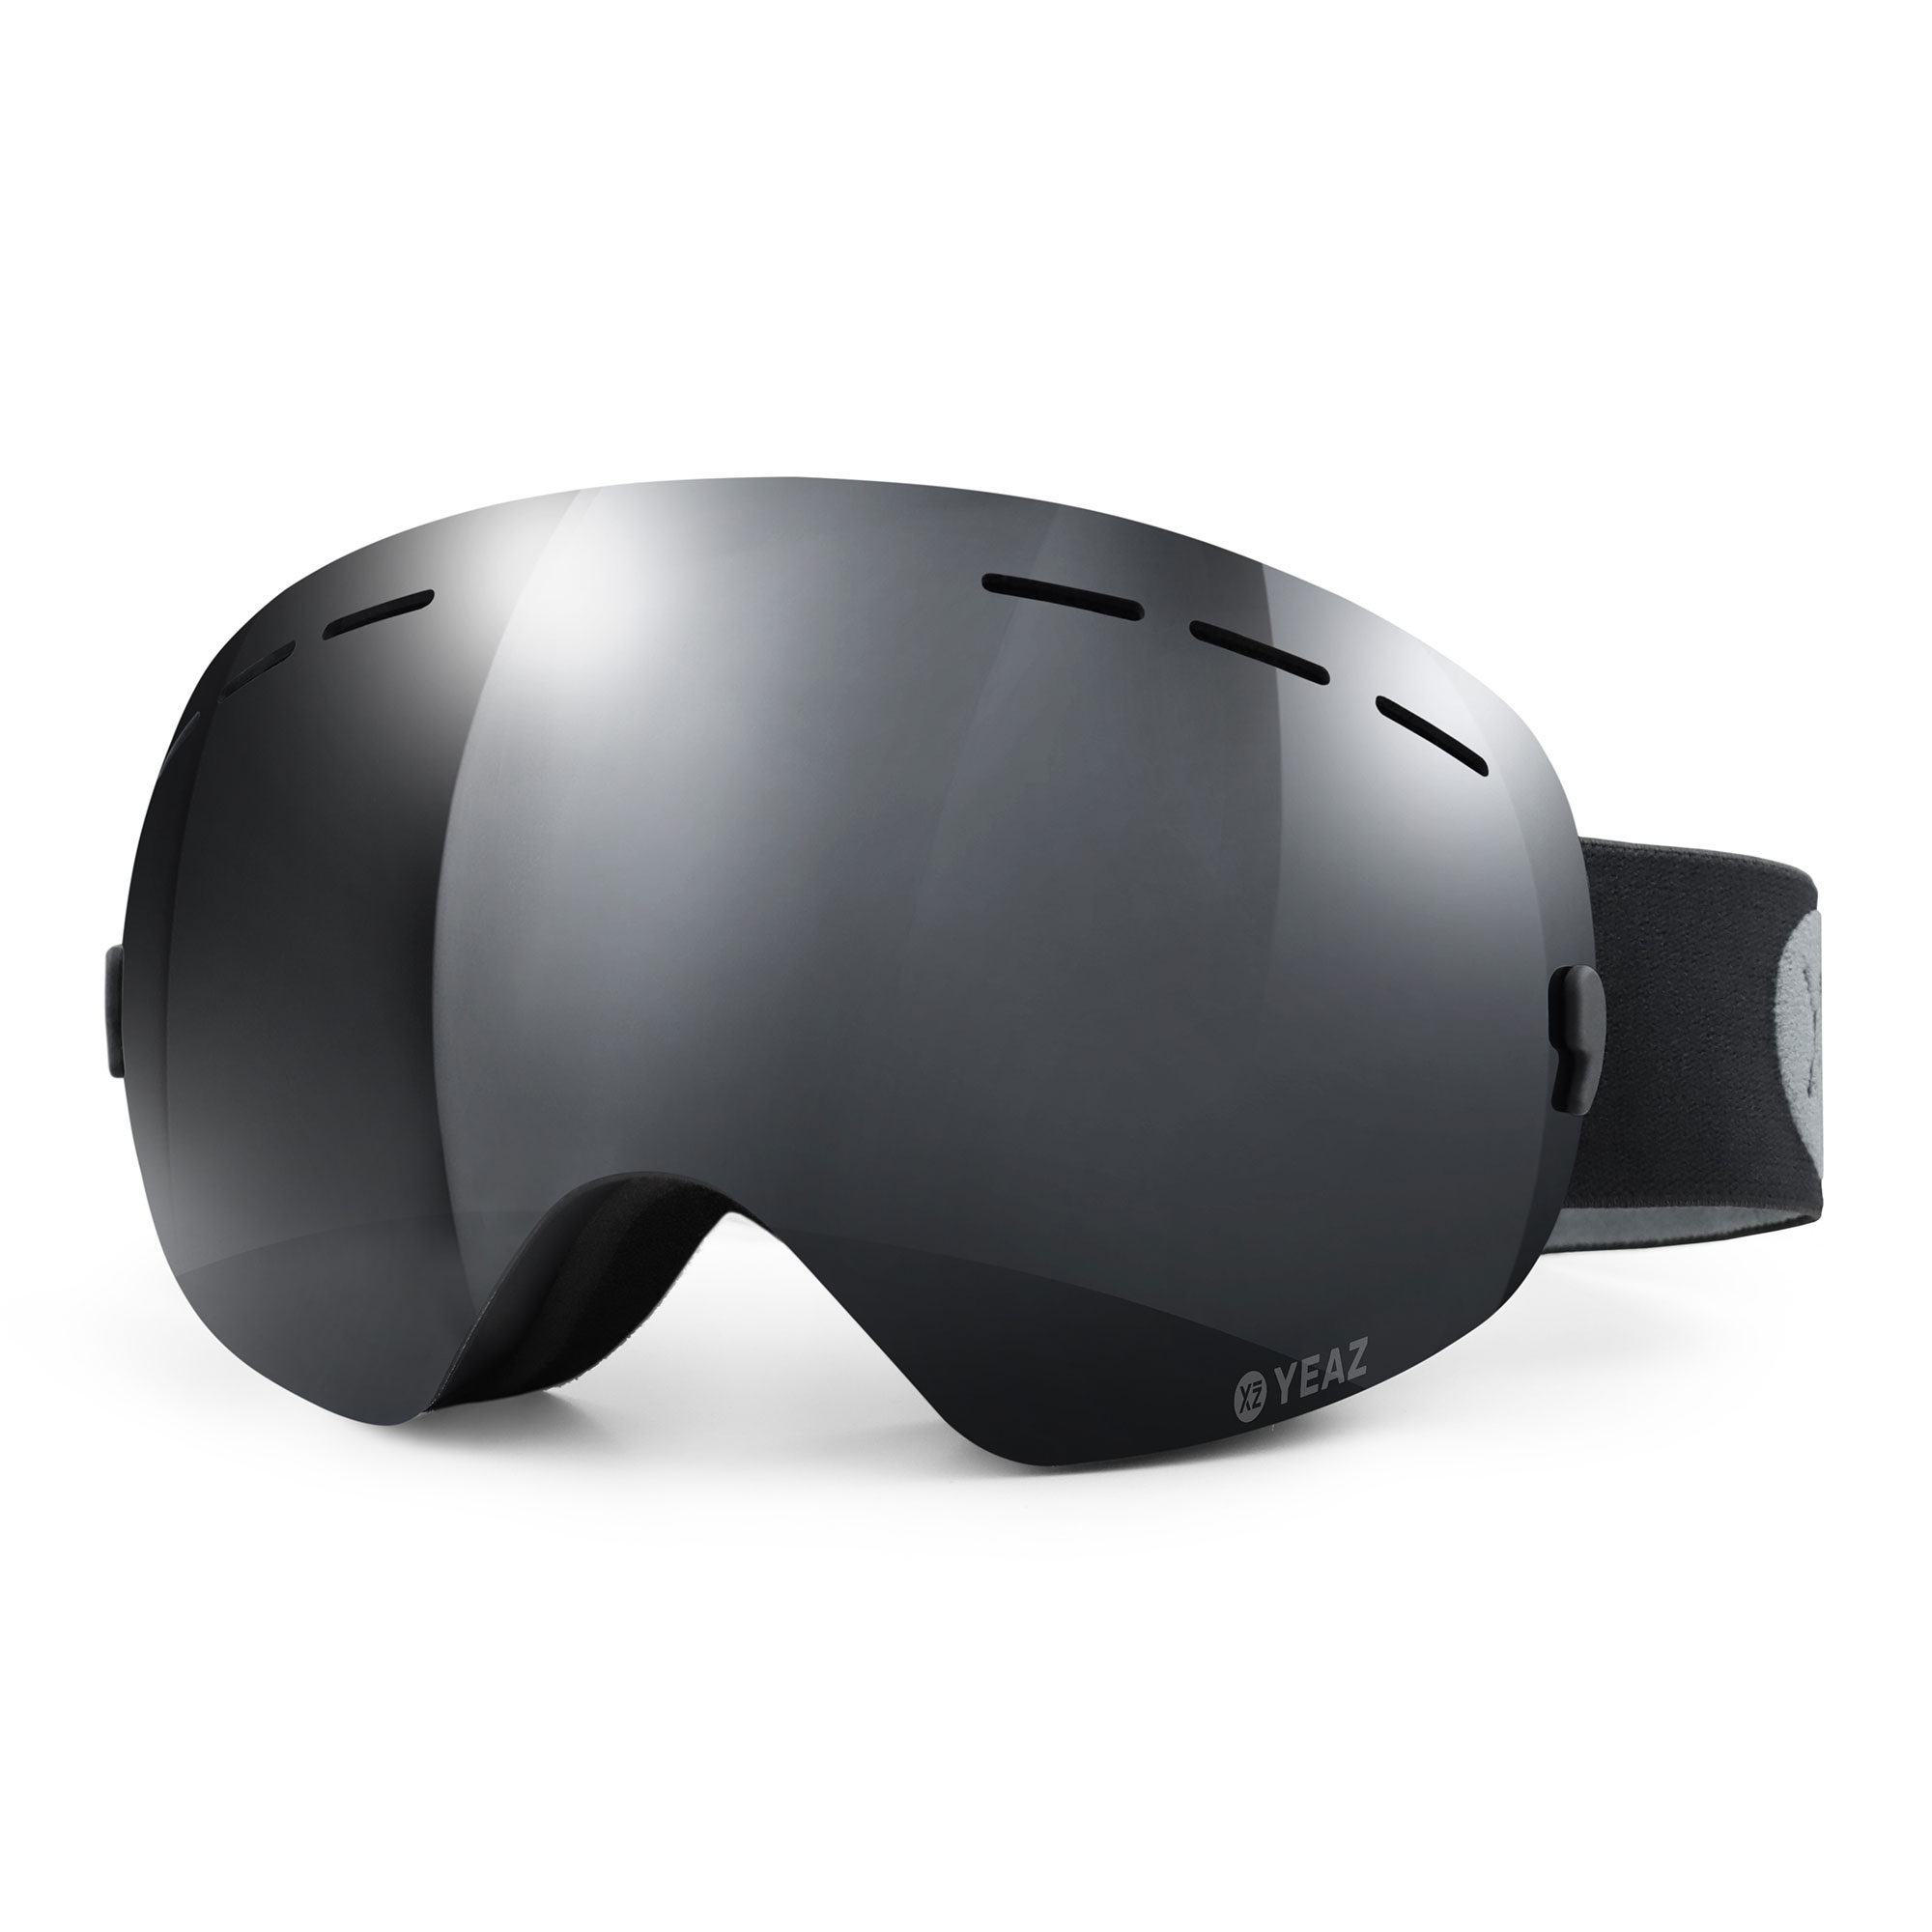 | YEAZ goggles XTRM-SUMMIT Snowboard | black | Ski- goggles Ski- Snowboard / frameless YEAZ